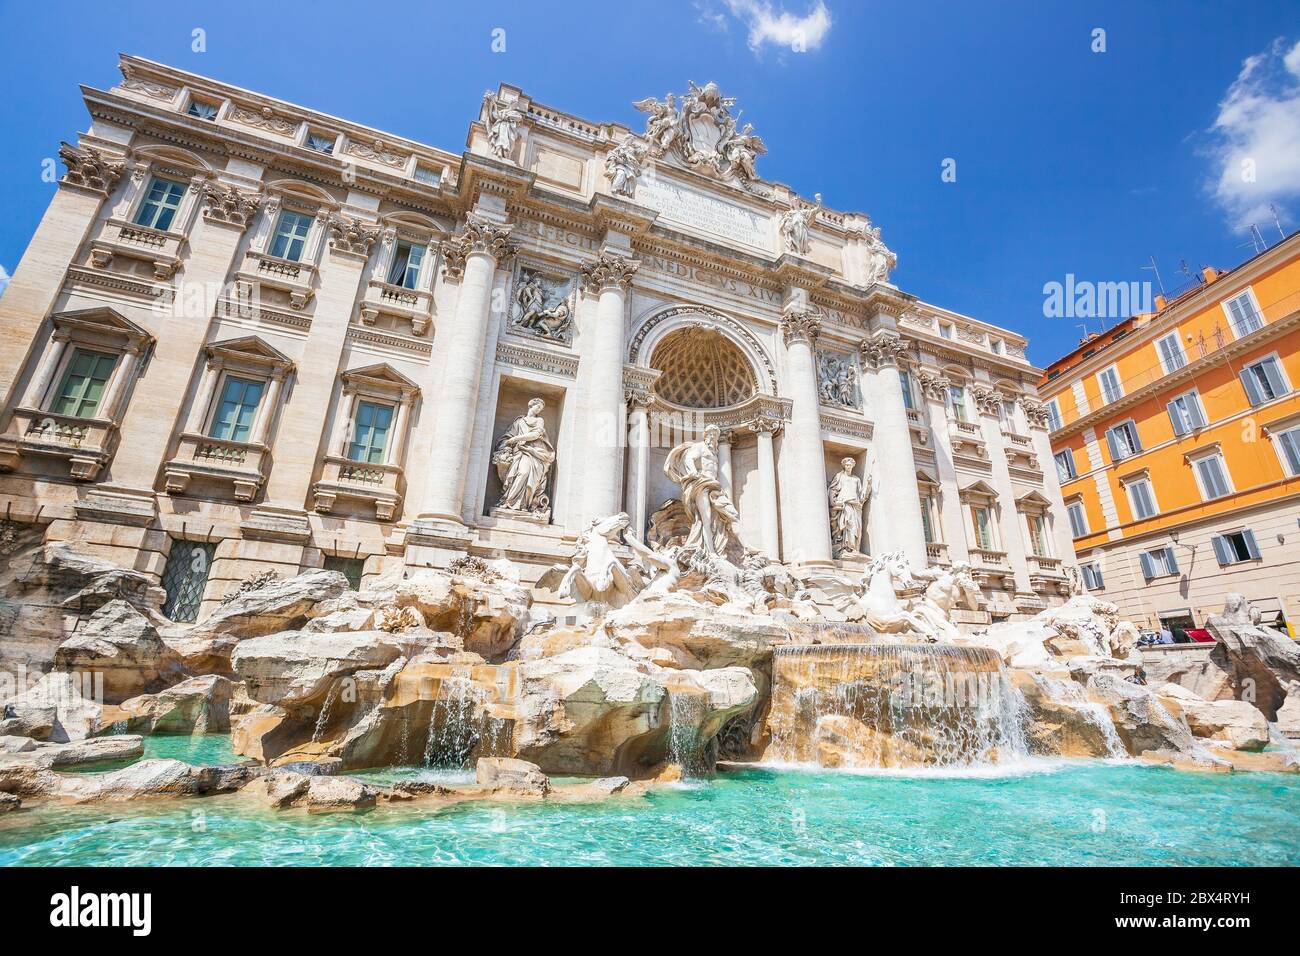 Fontana di Trevi la più famosa fontana di Roma. Foto Stock